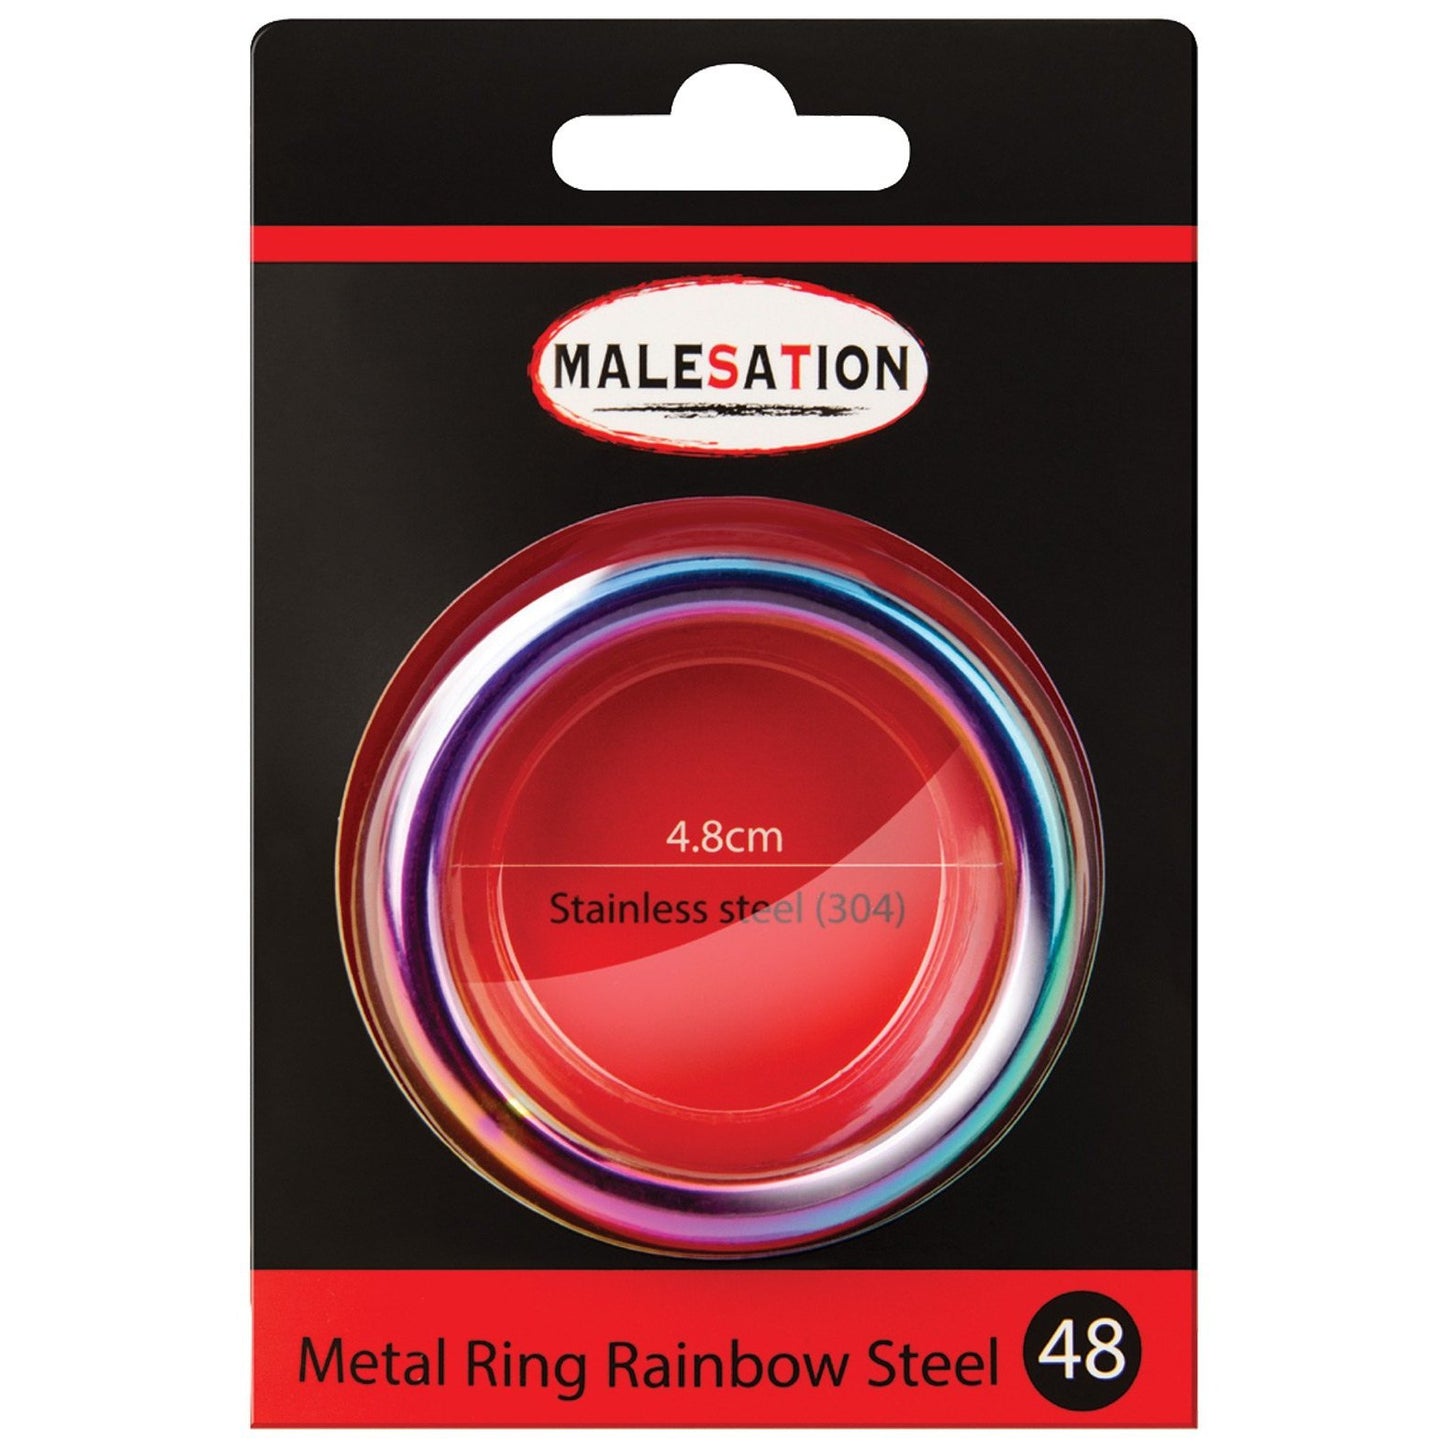 Malesation Nickel Free Stainless Steel Rainbow